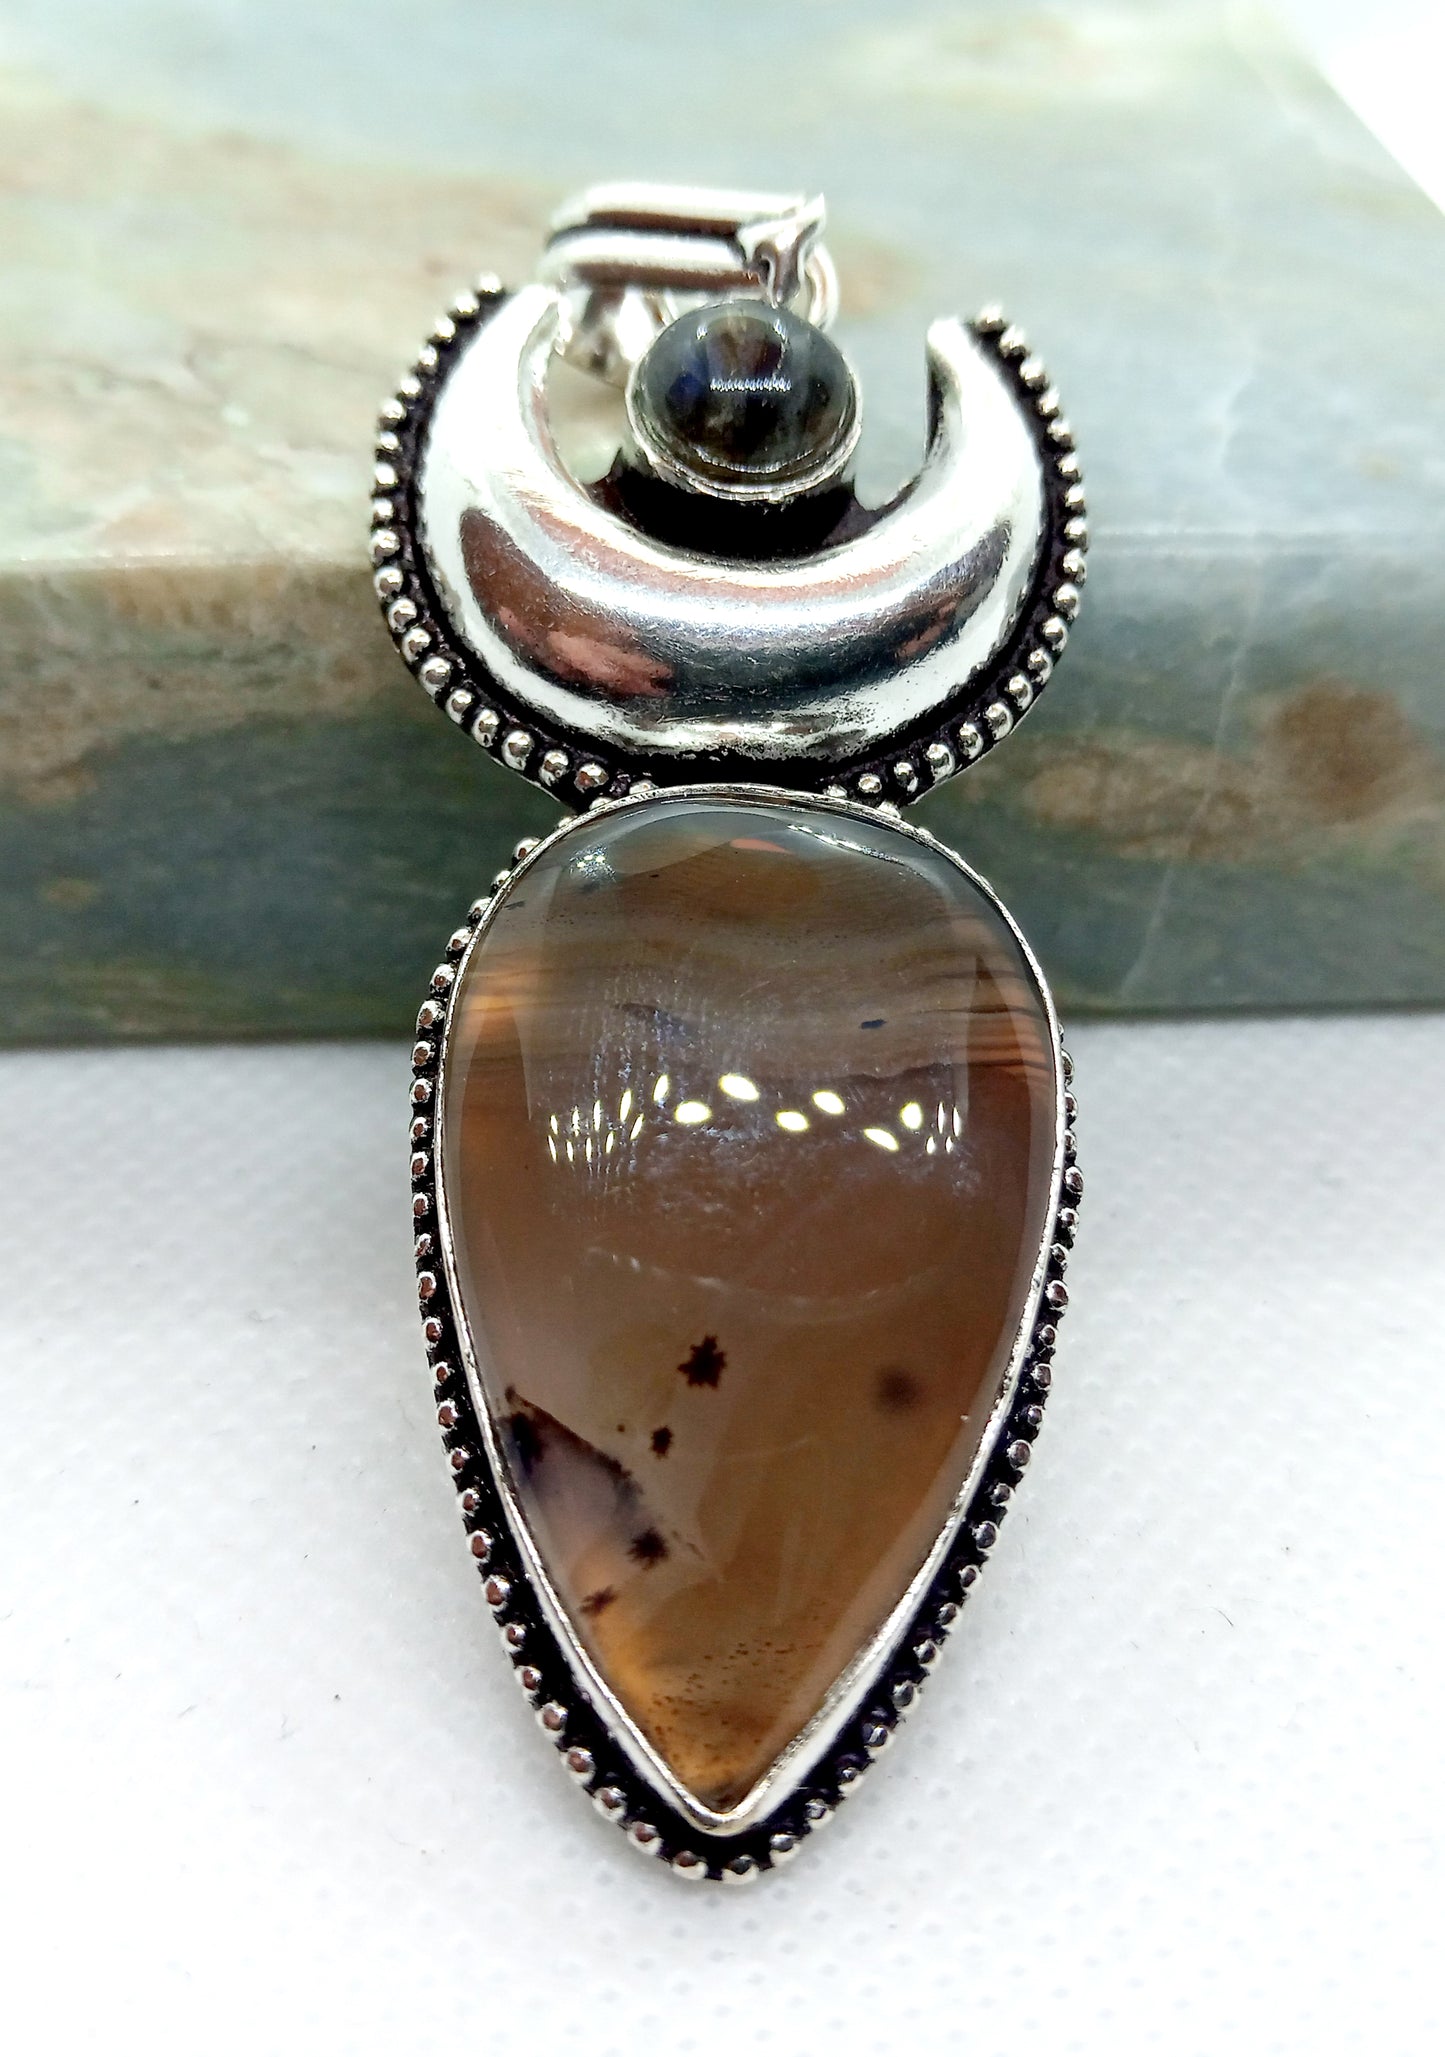 Agate pendant with labradorite